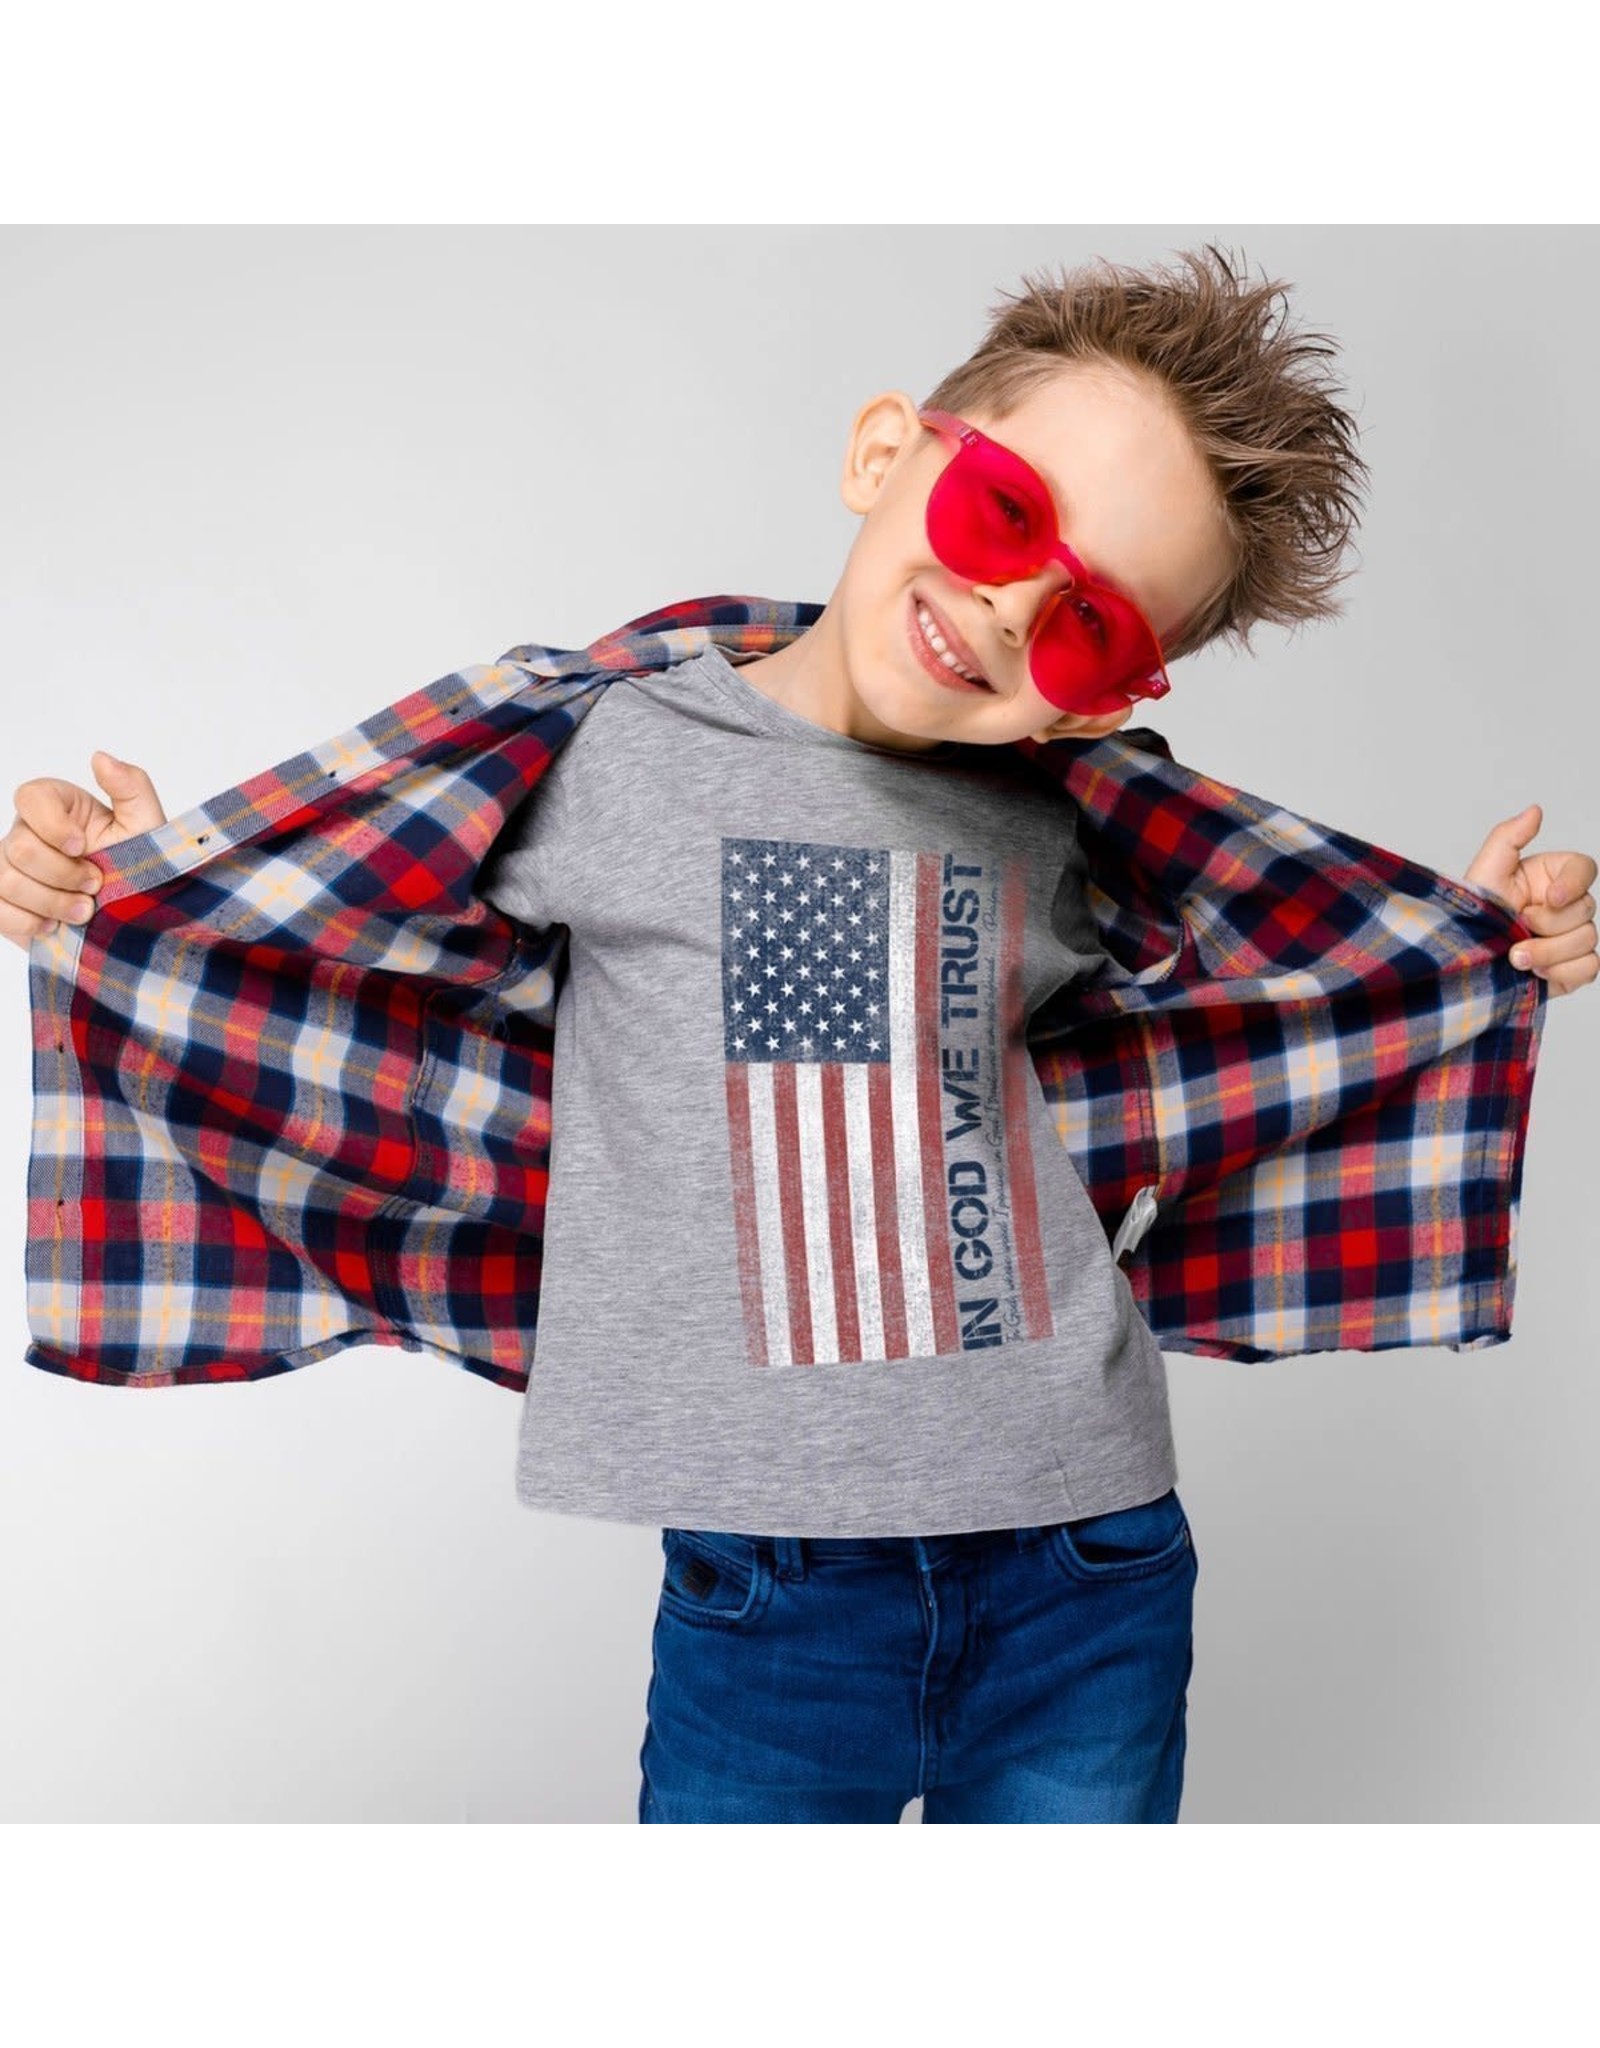 Kerusso Kid's In God We Trust Flag Kid's T-Shirt